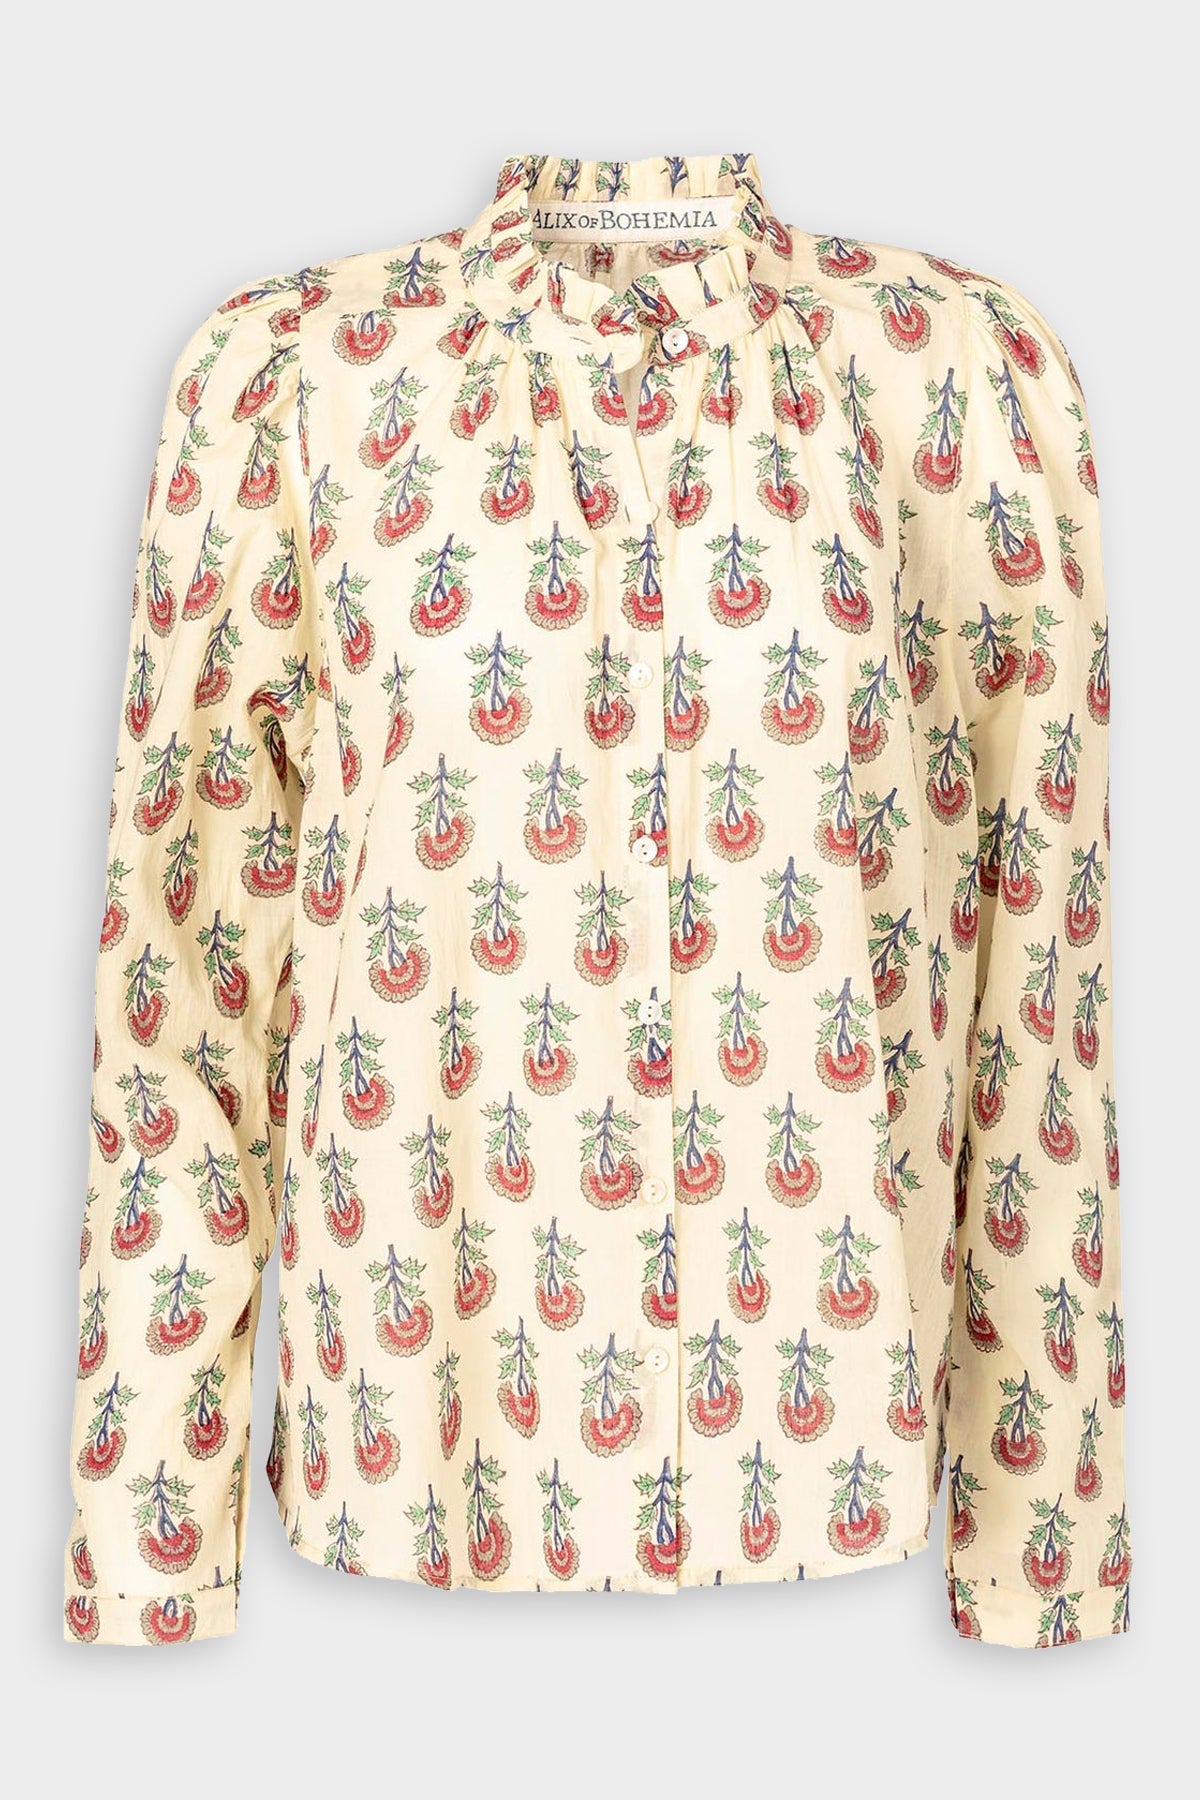 Annabel Ivory Rose Shirt in Cream Chiffon - shop-olivia.com